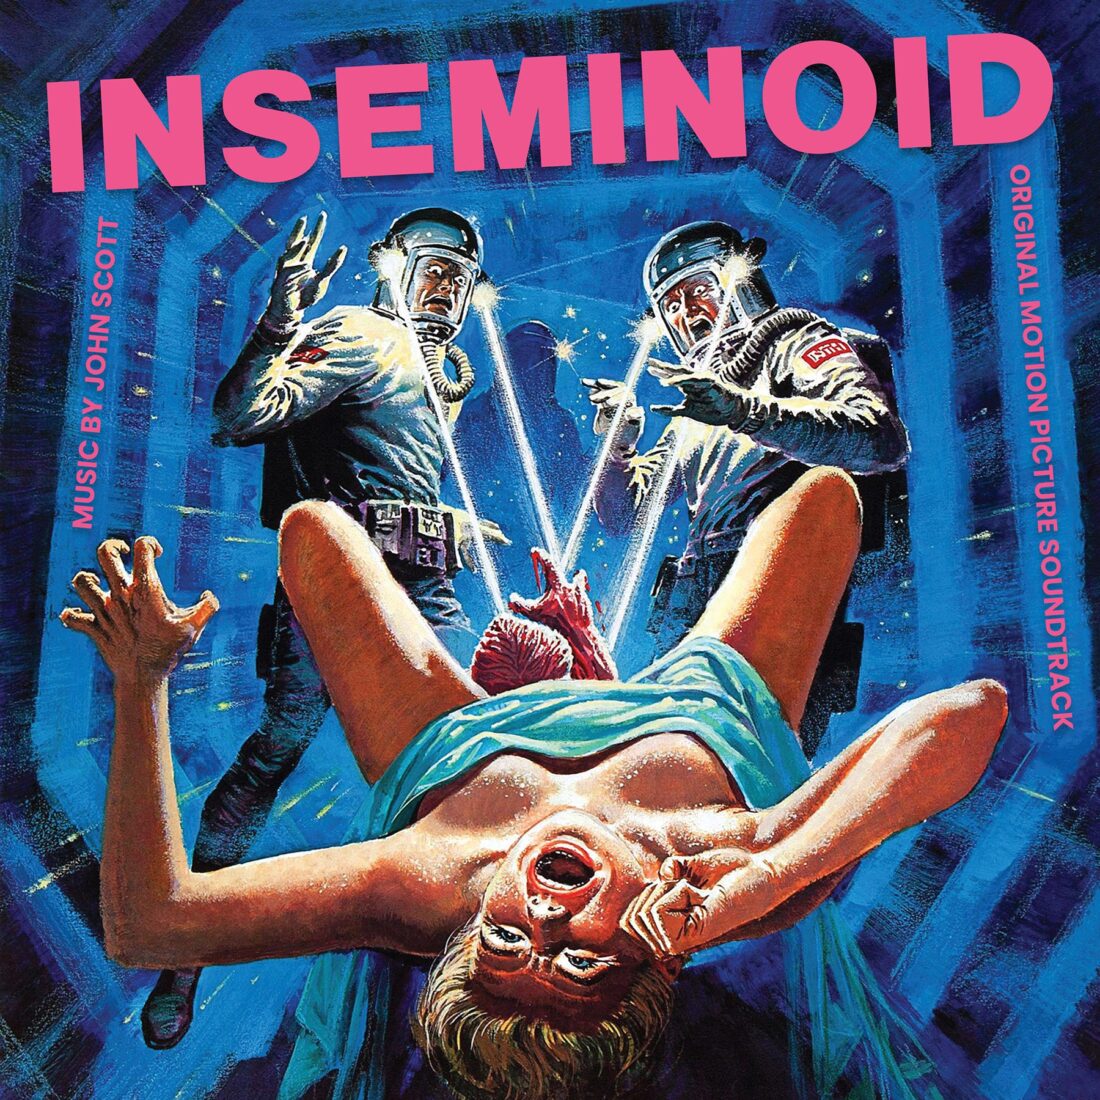 Inseminoid (Horrorplanet) Original Motion Picture Soundtrack RSD Black Friday 2021 Vinyl